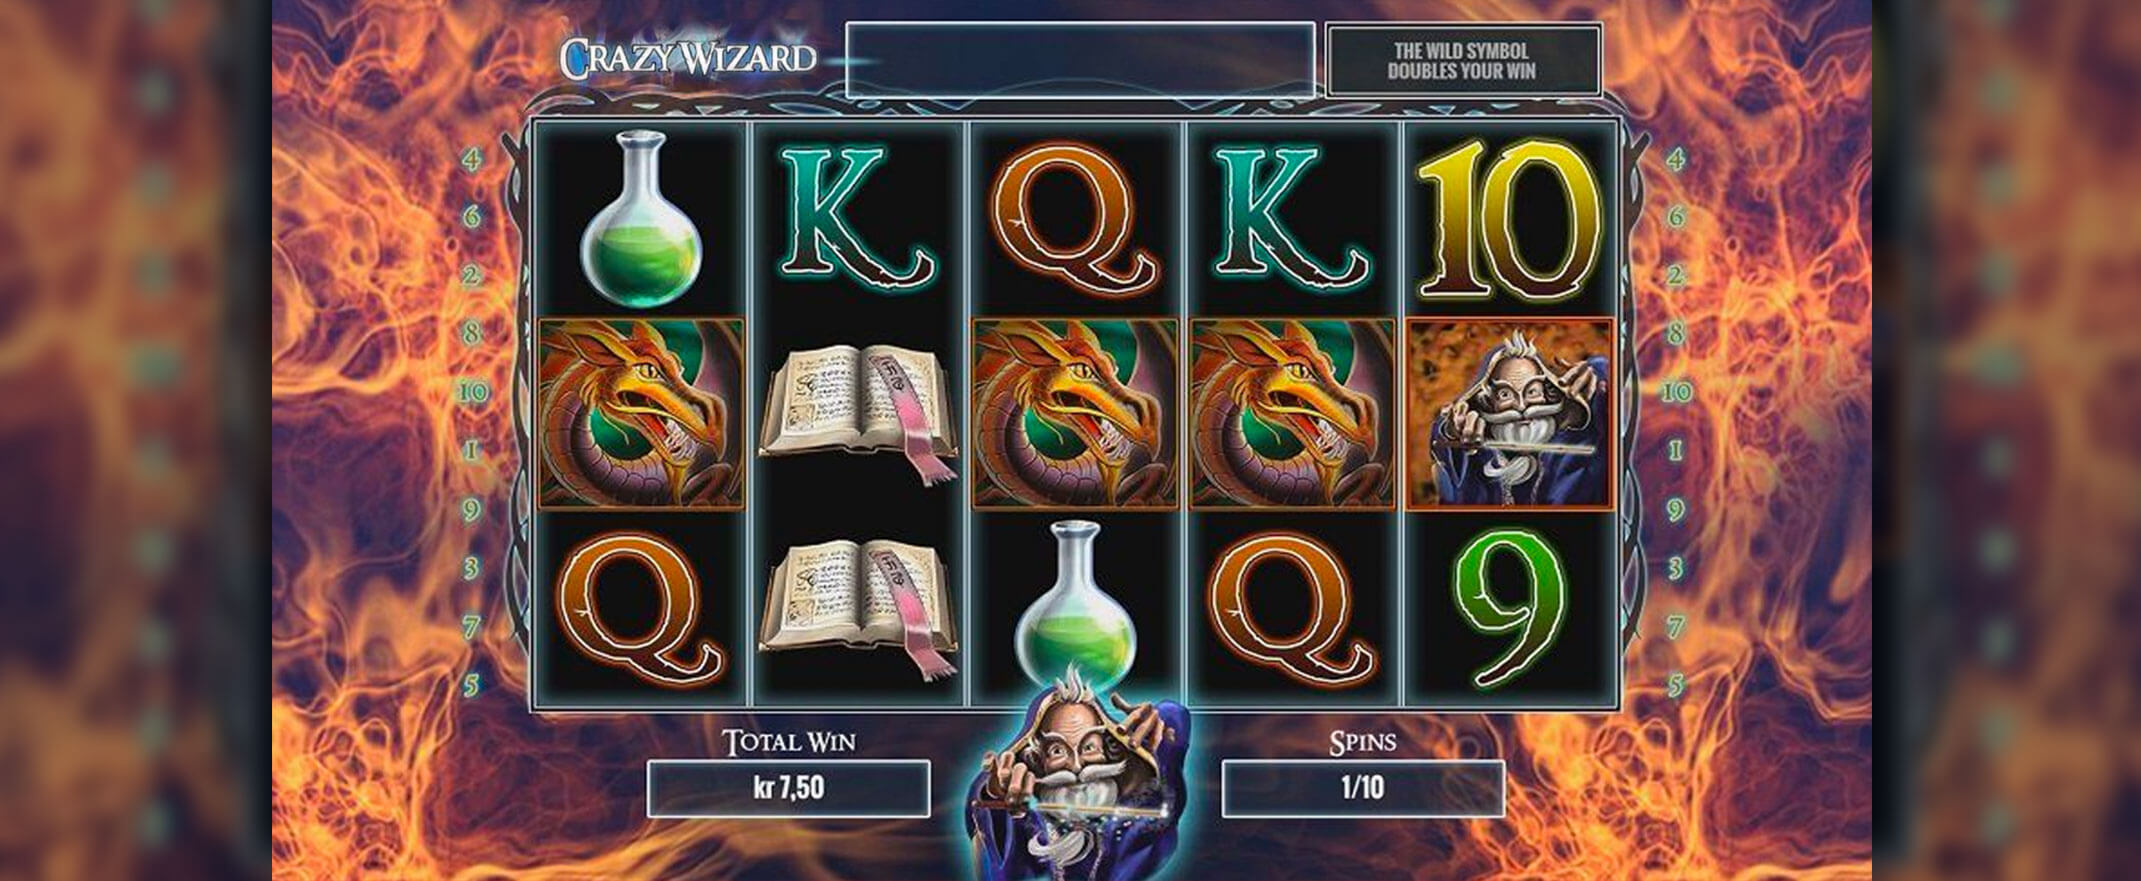 Crazy Wizard slot screenshot of the reels